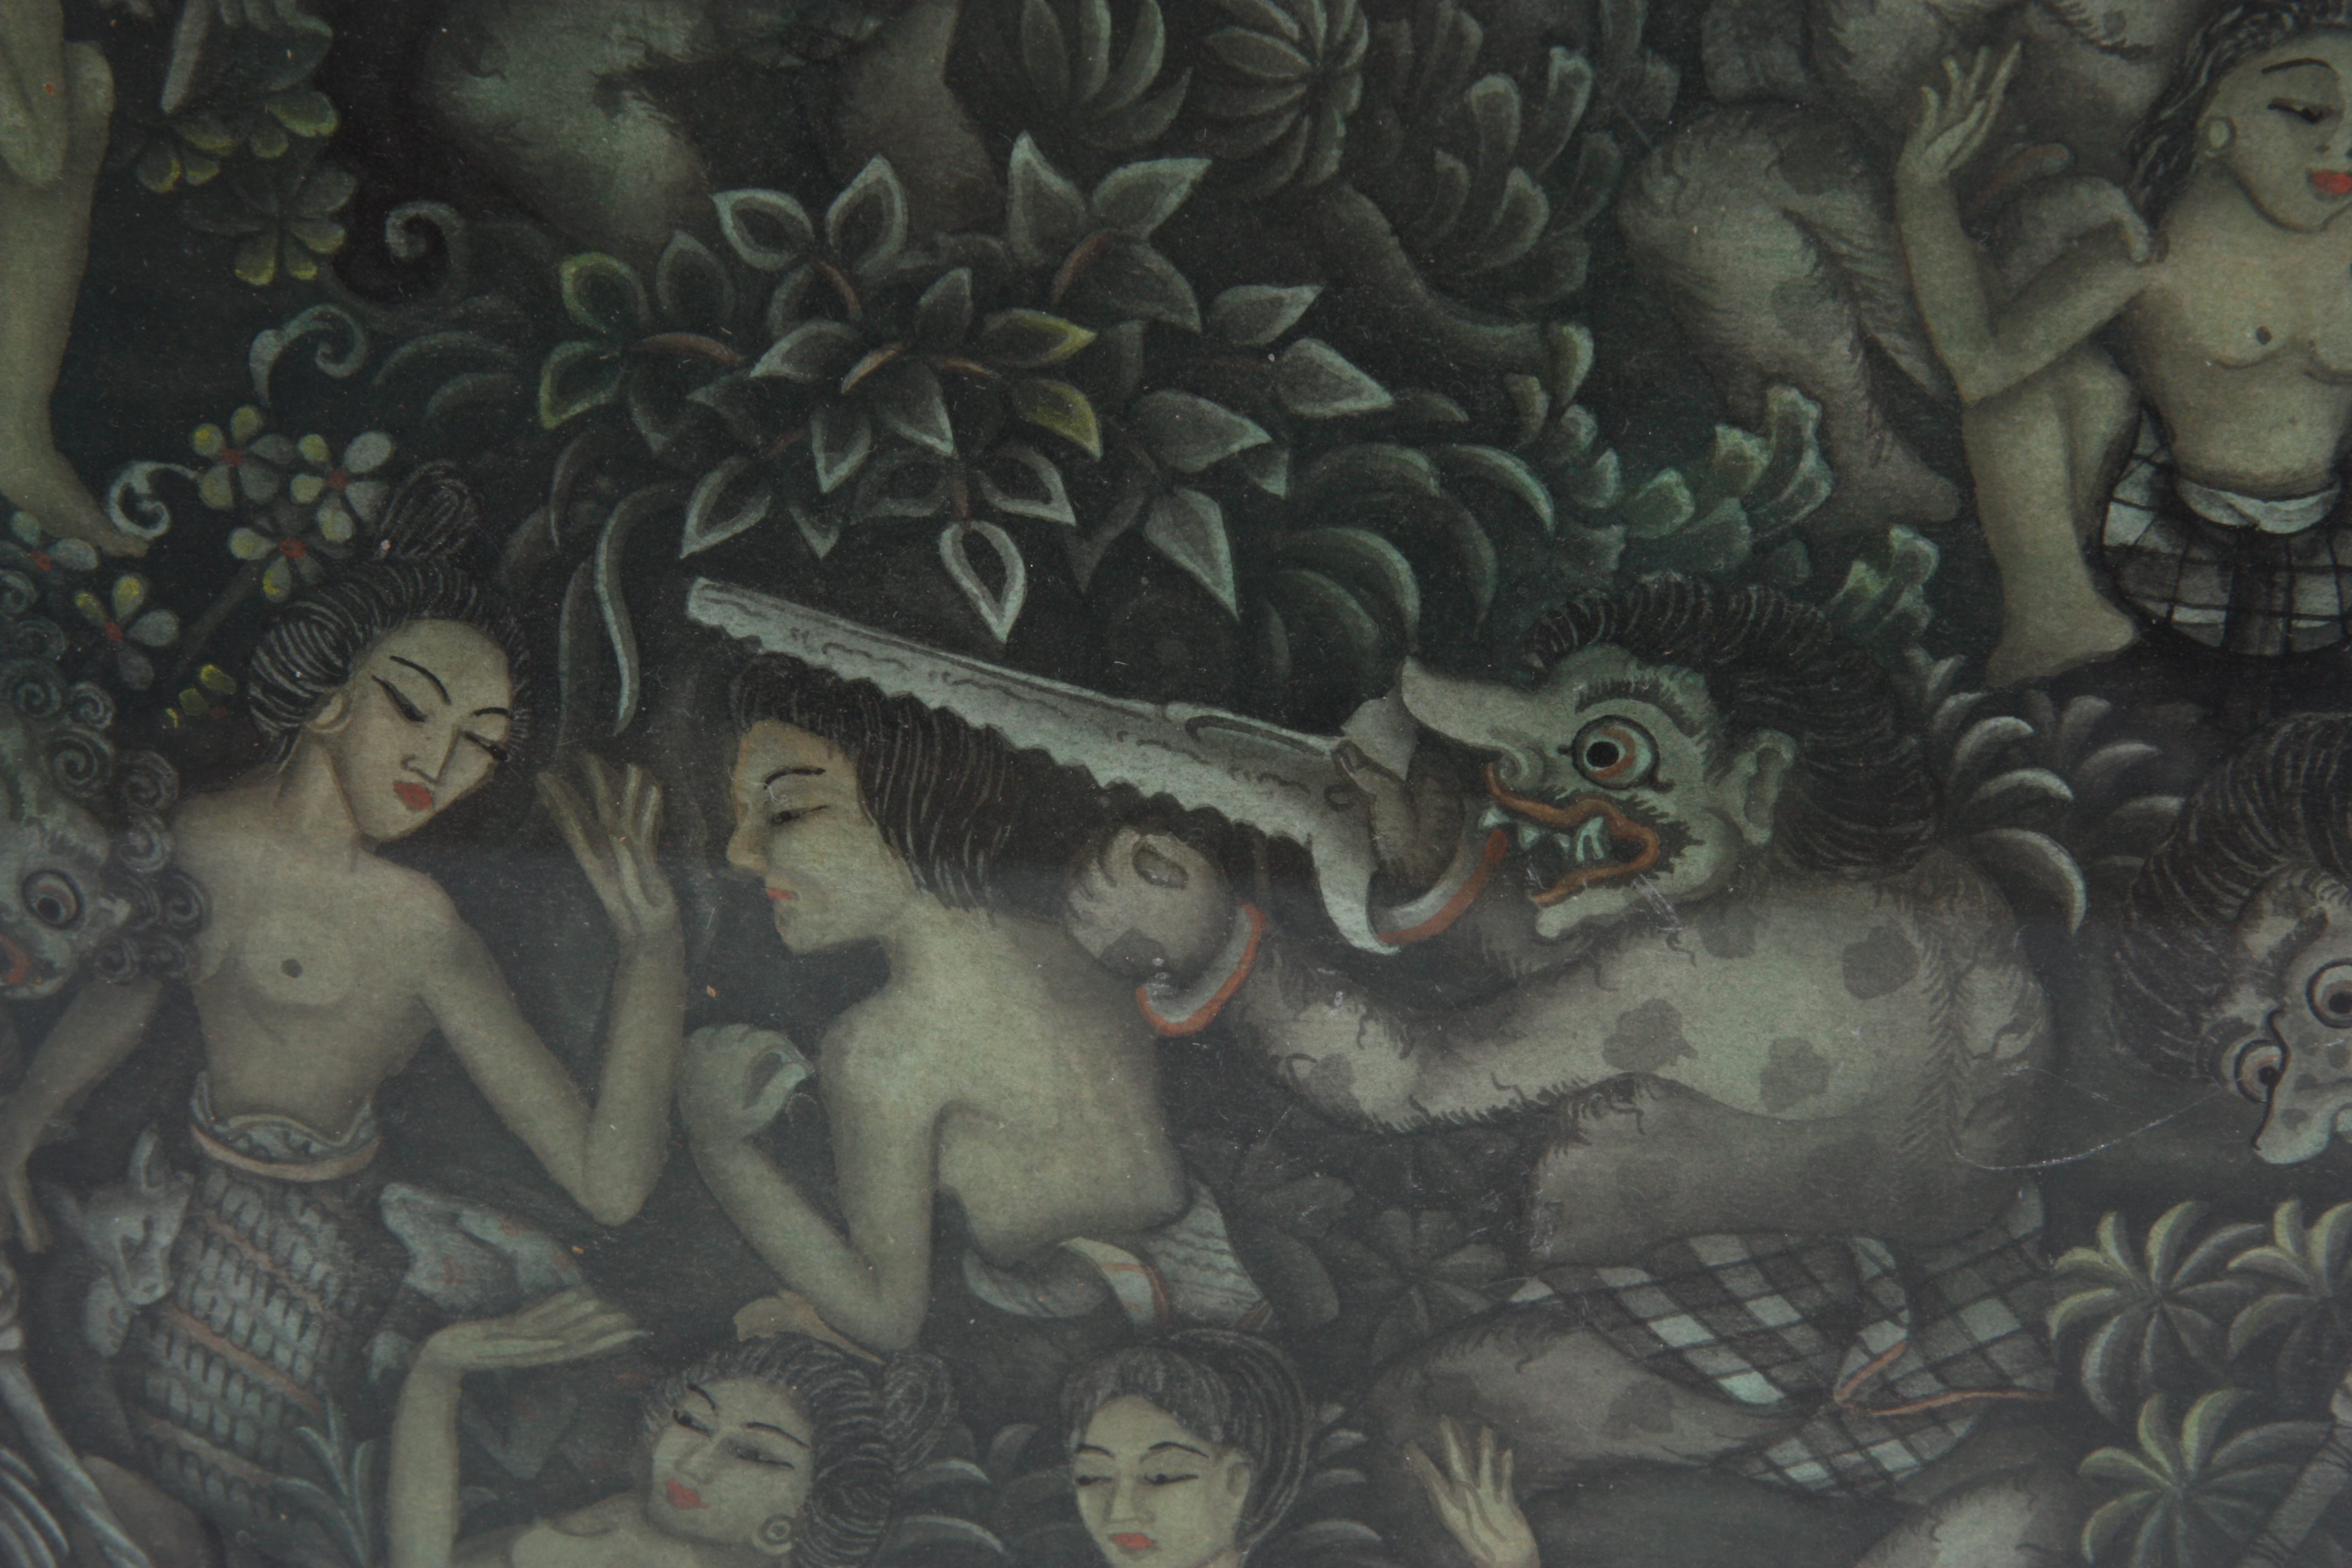 IDA BAGUS KETUT PANDA, BATUAN, BALI WATERCOLOUR SCENE OF MYTHICAL GODS WITH YOUNG WOMEN 42cm high - Image 4 of 8